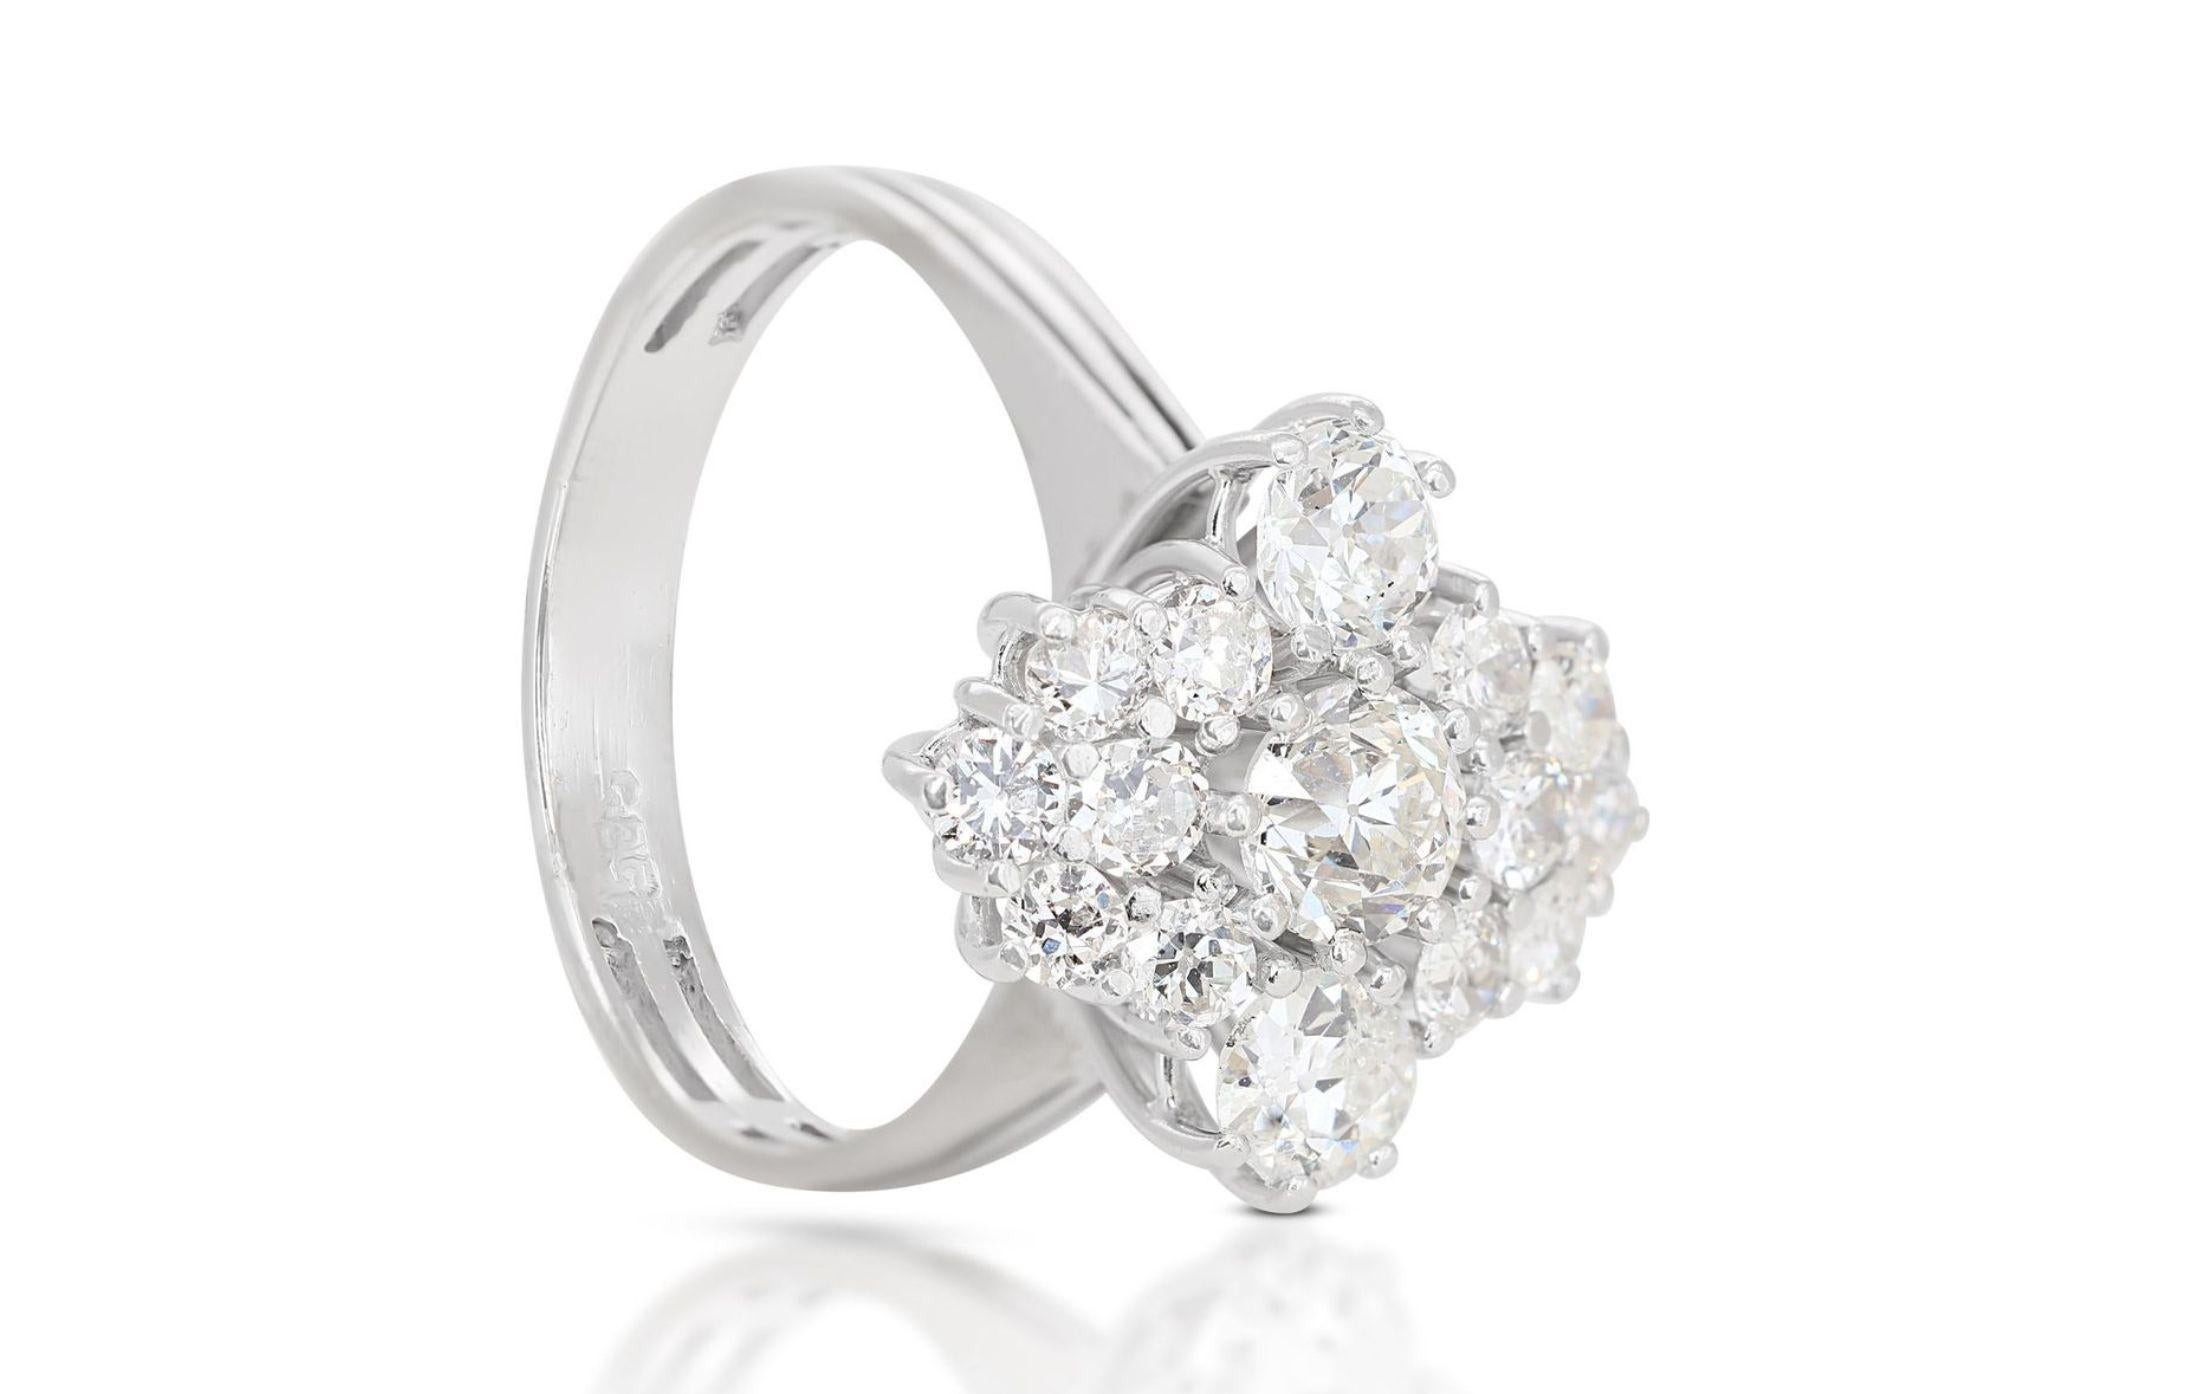 Sparkling 1.70ct Diamond Ring set in 14K White Gold For Sale 3